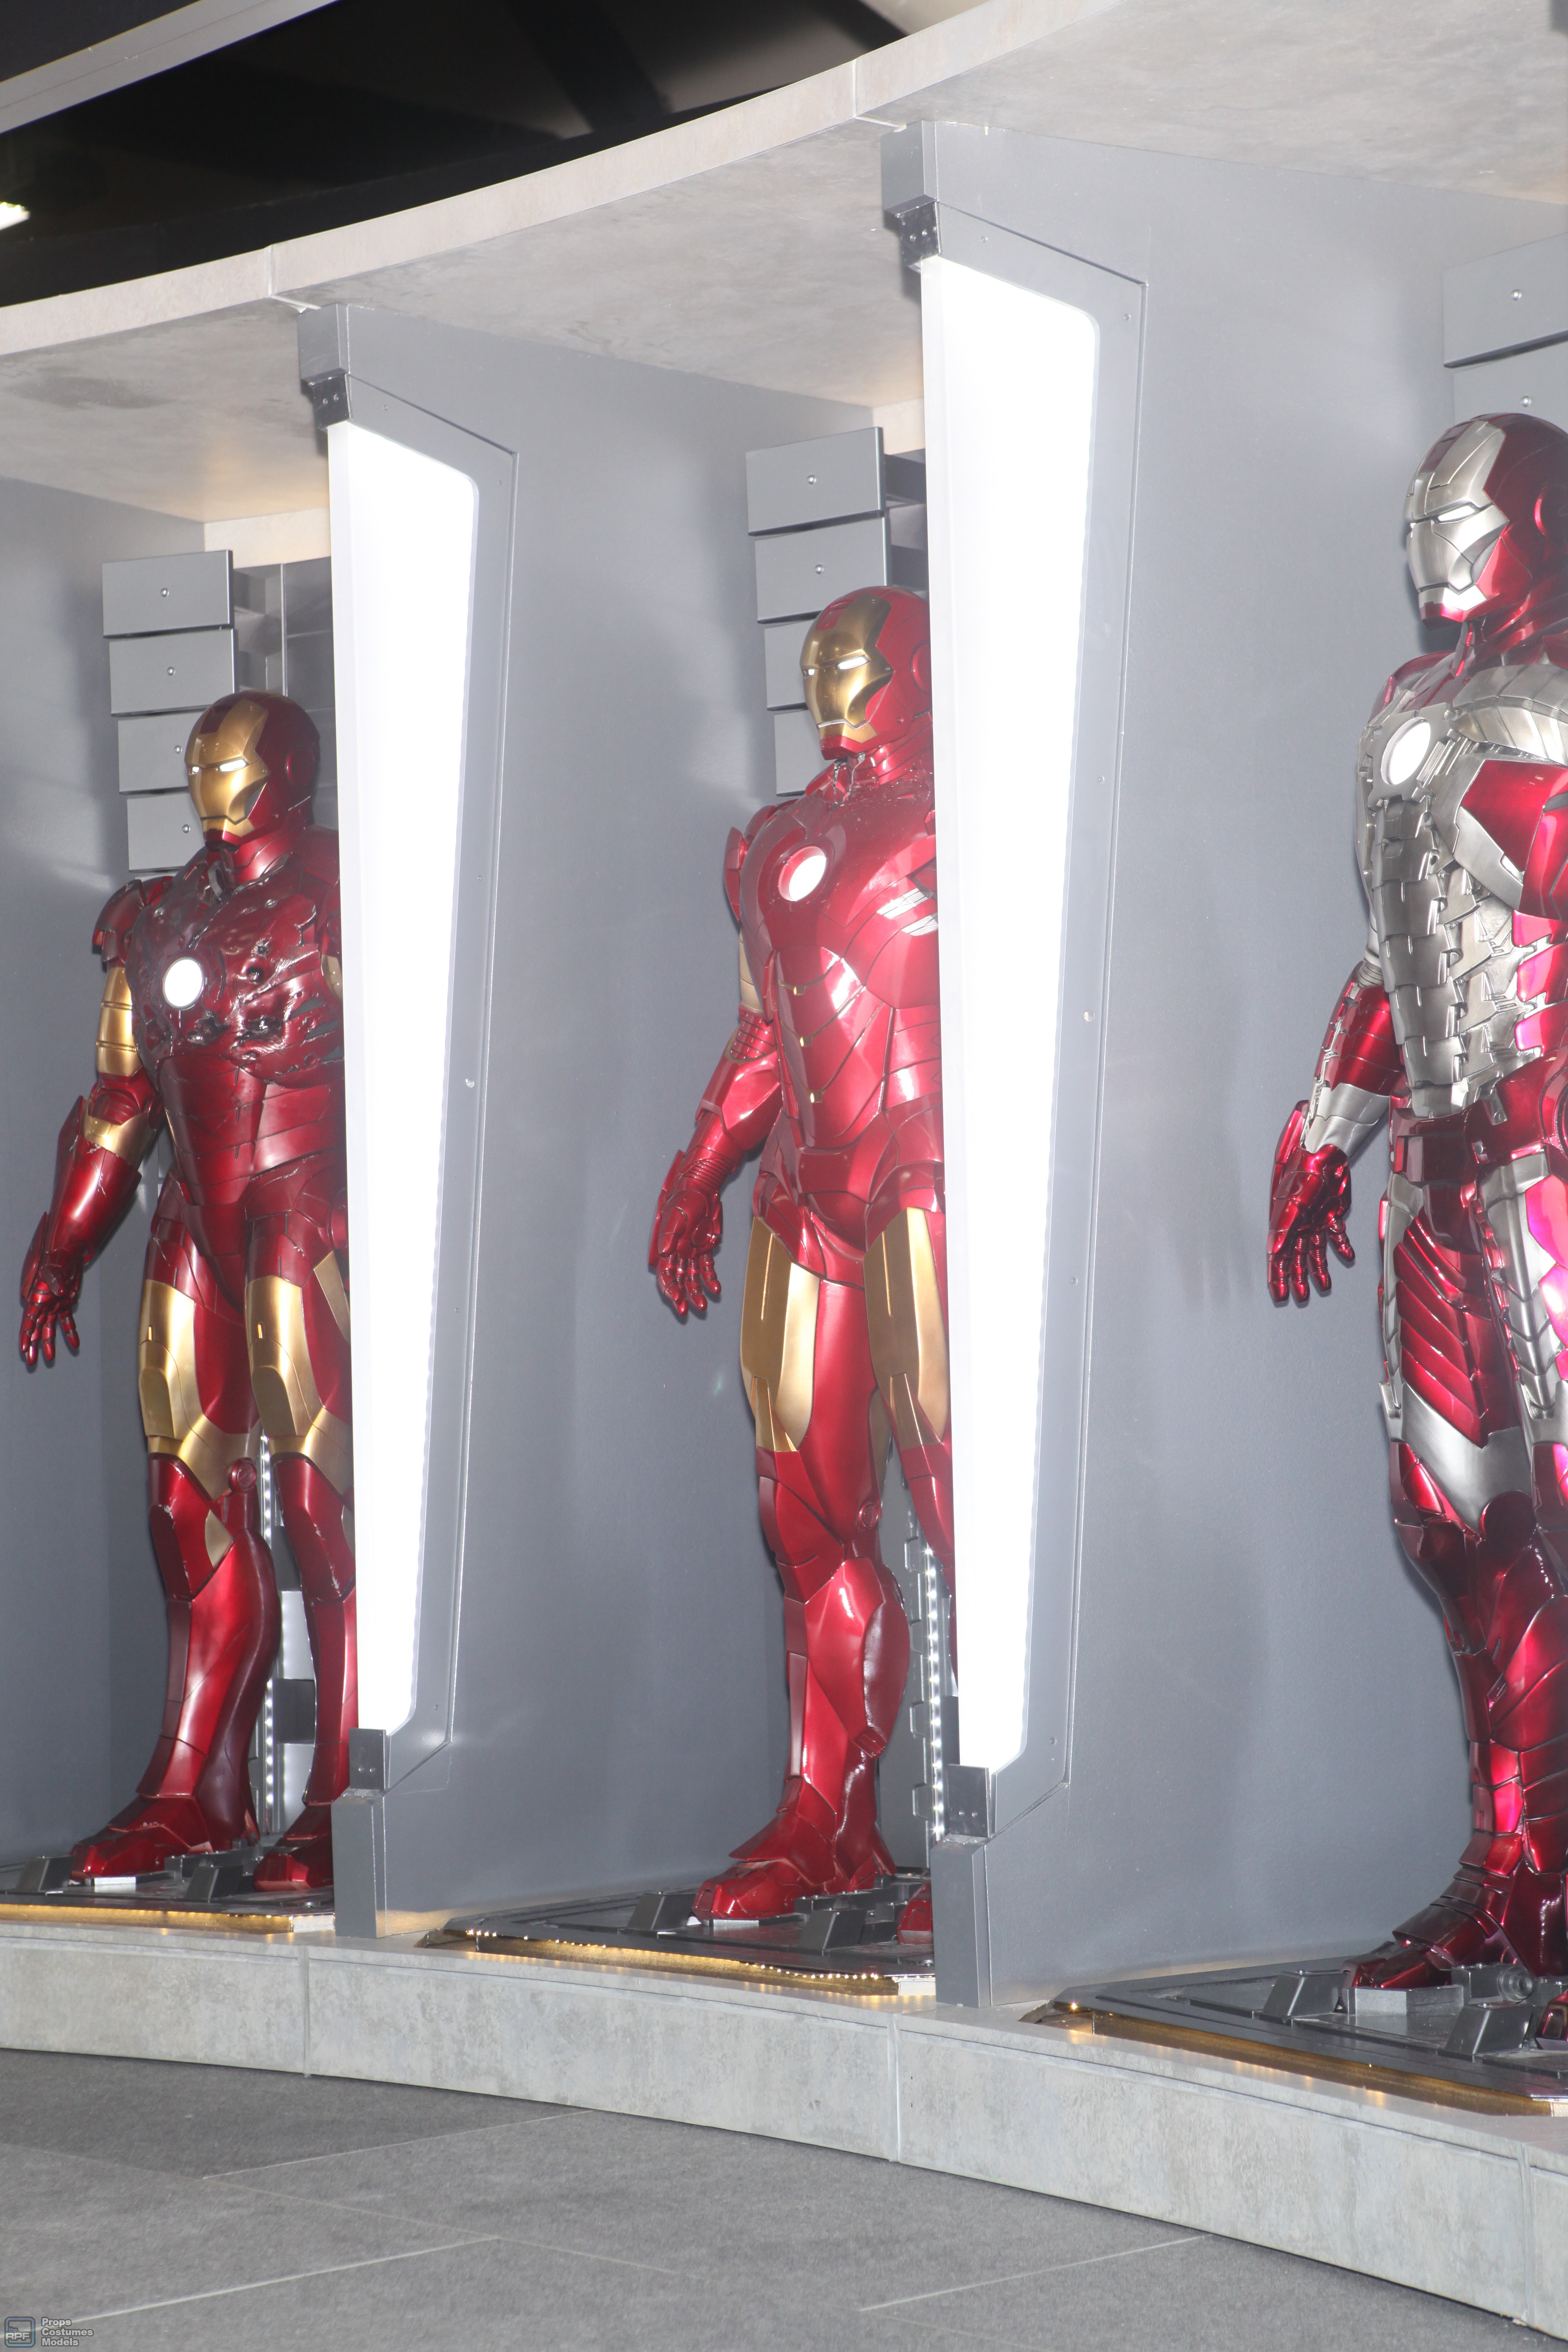 Iron Man Mark IV Costume